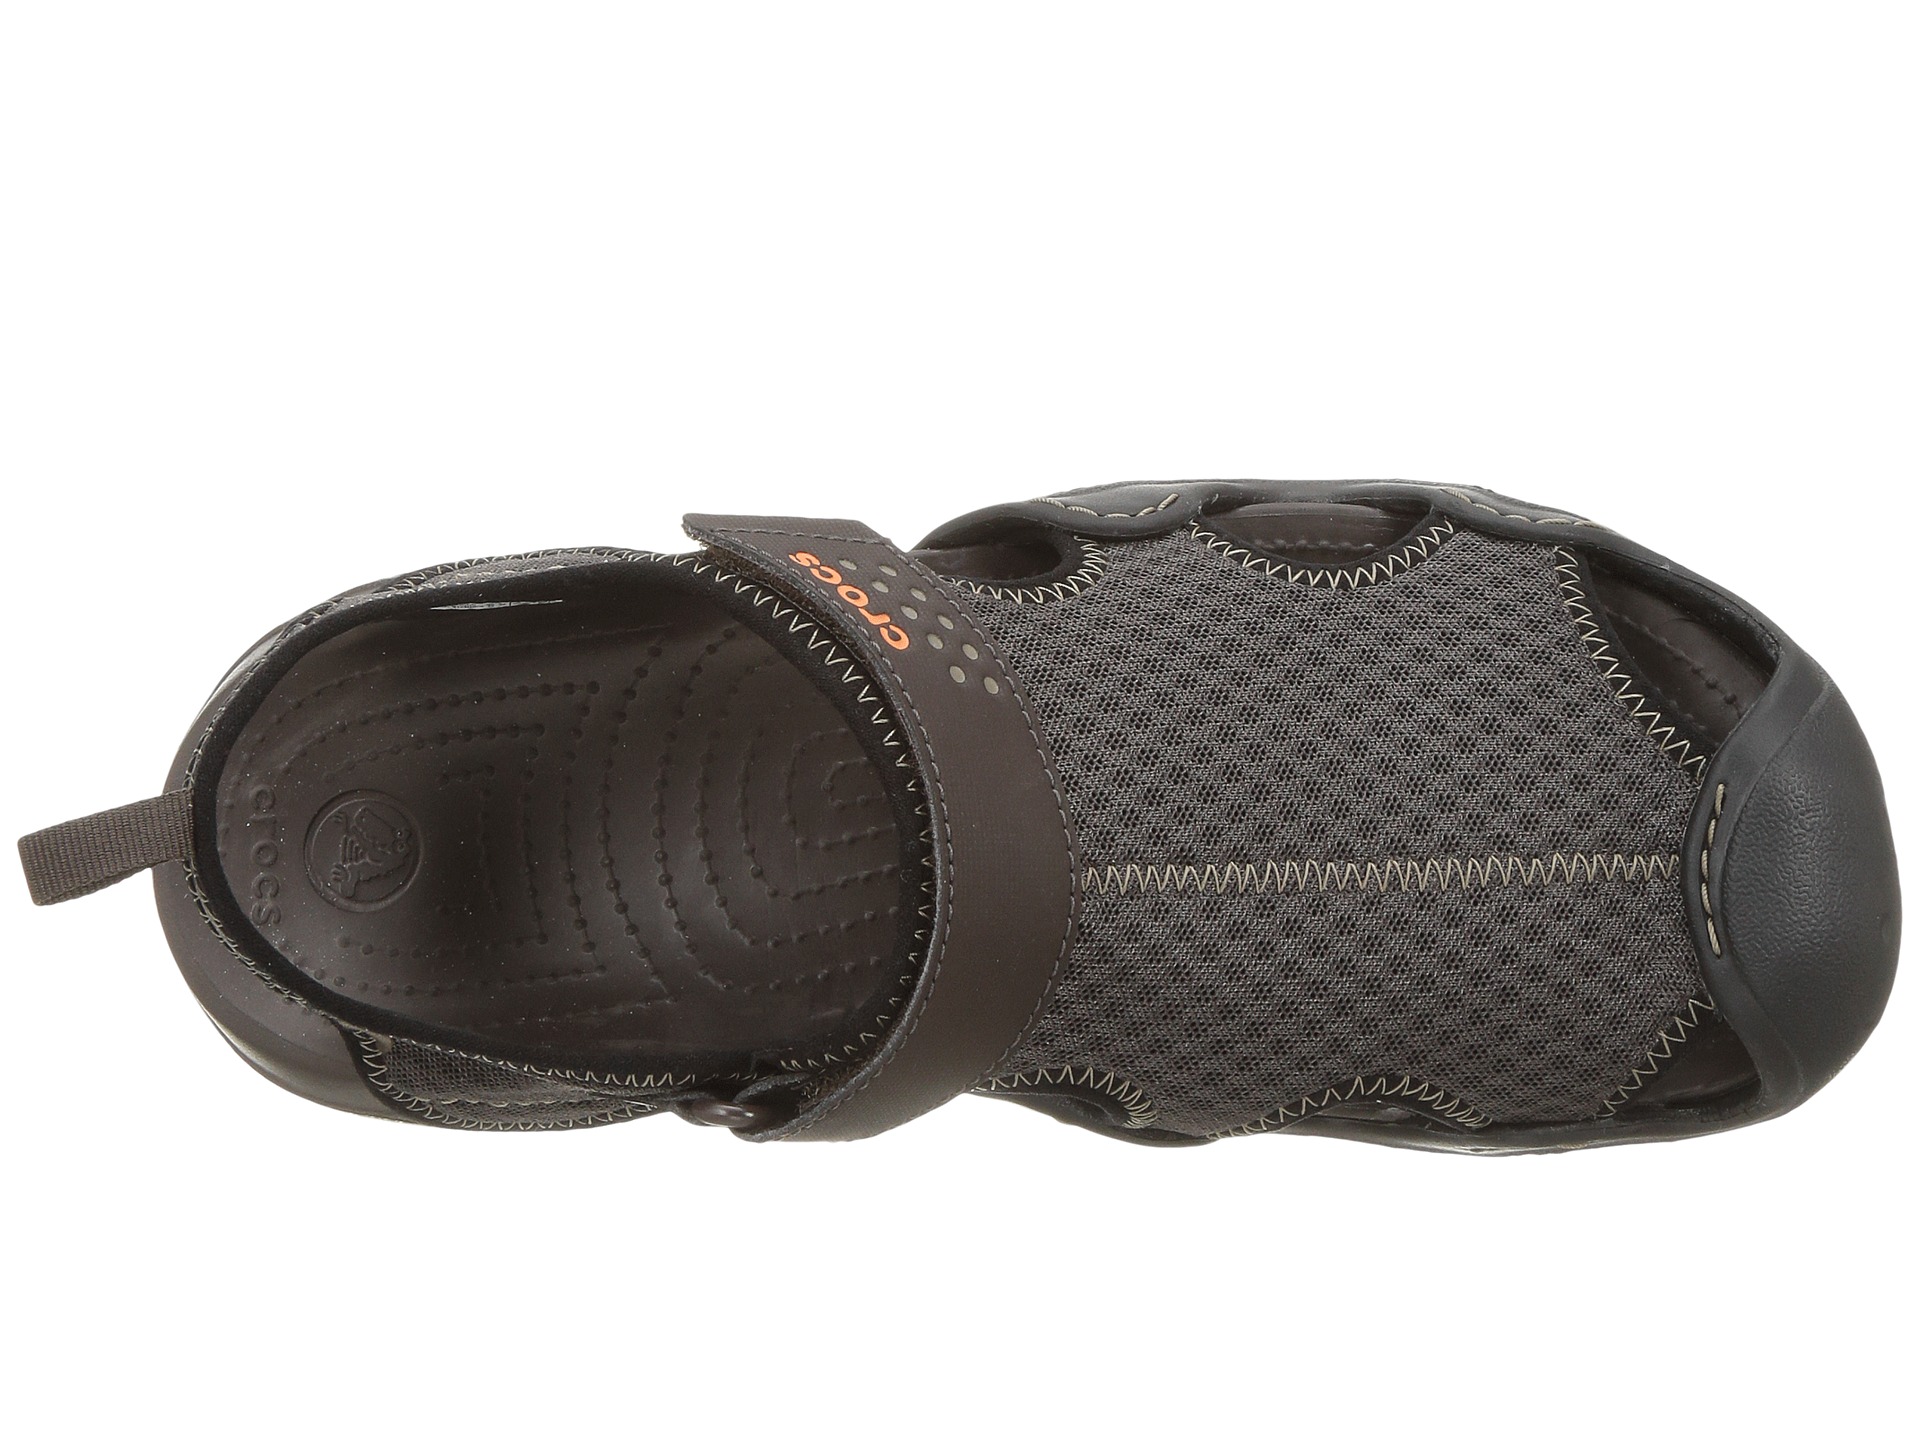 Crocs Swiftwater Sandal - Zappos.com Free Shipping BOTH Ways